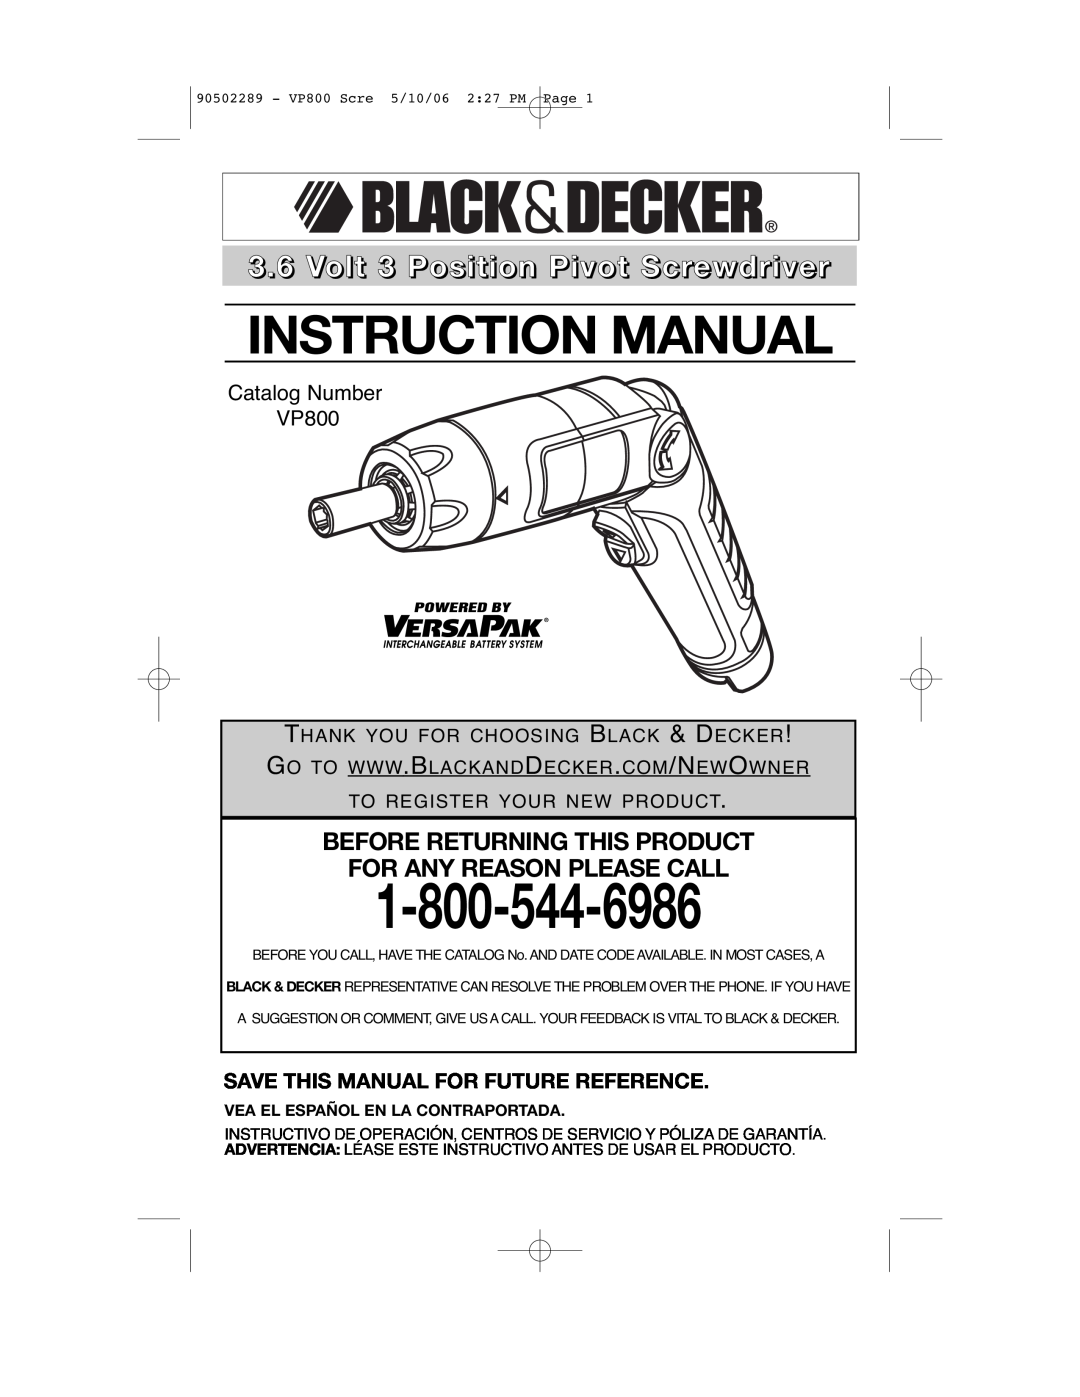 Black & Decker instruction manual Instruction Manual, Volt 3 Position Pivot Screwdriver, Catalog Number VP800 